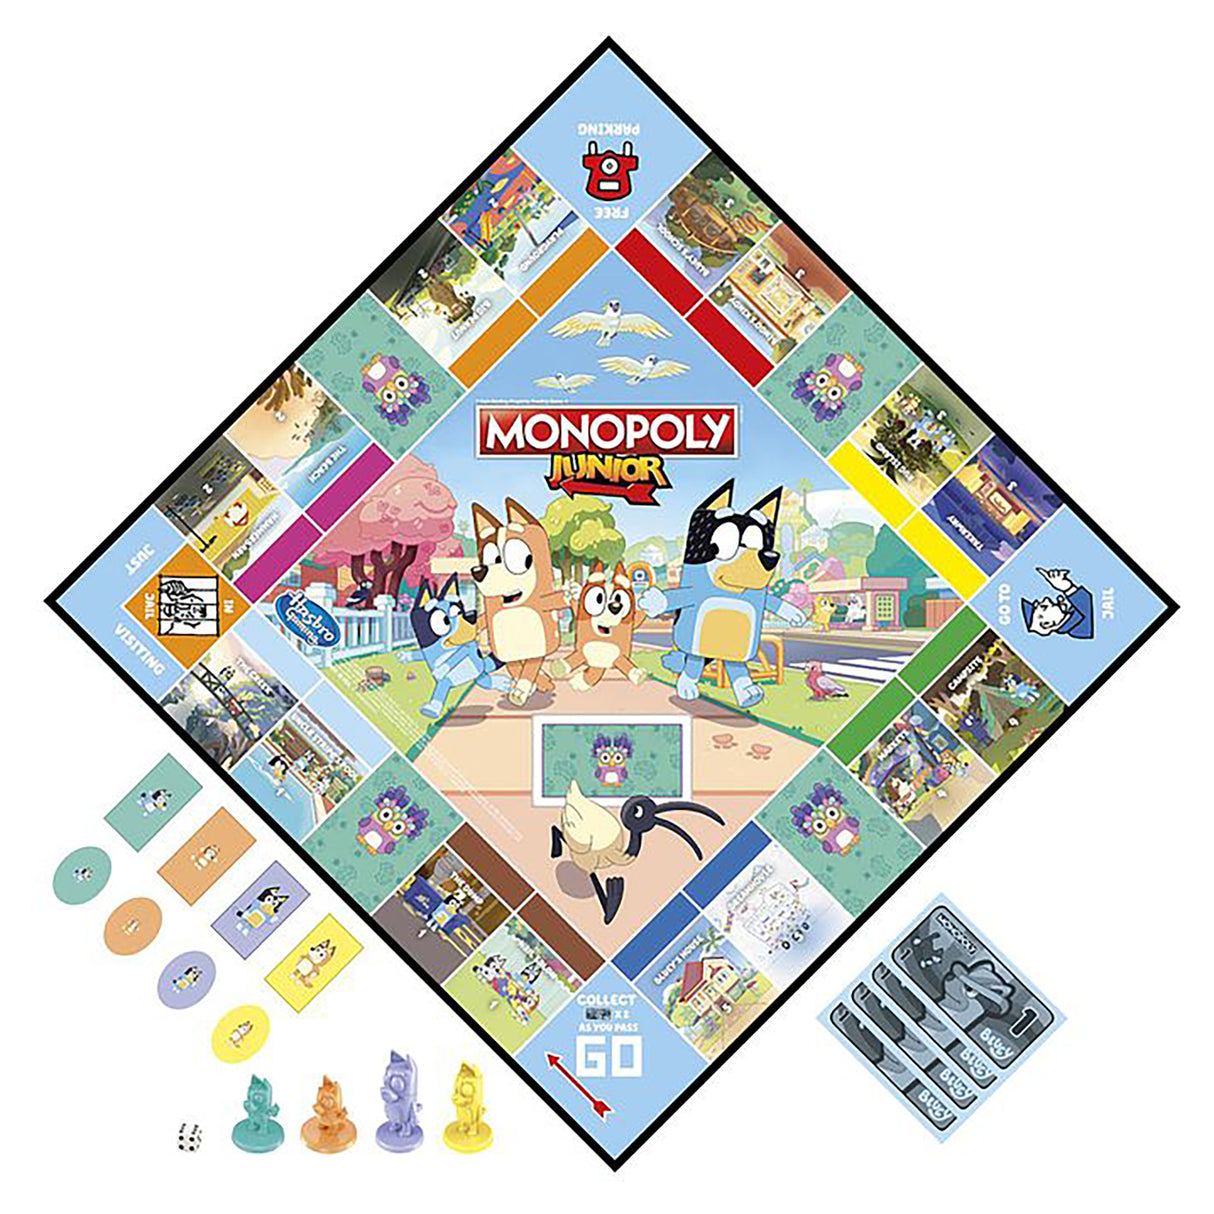 Monopoly Bluey Junior Edition